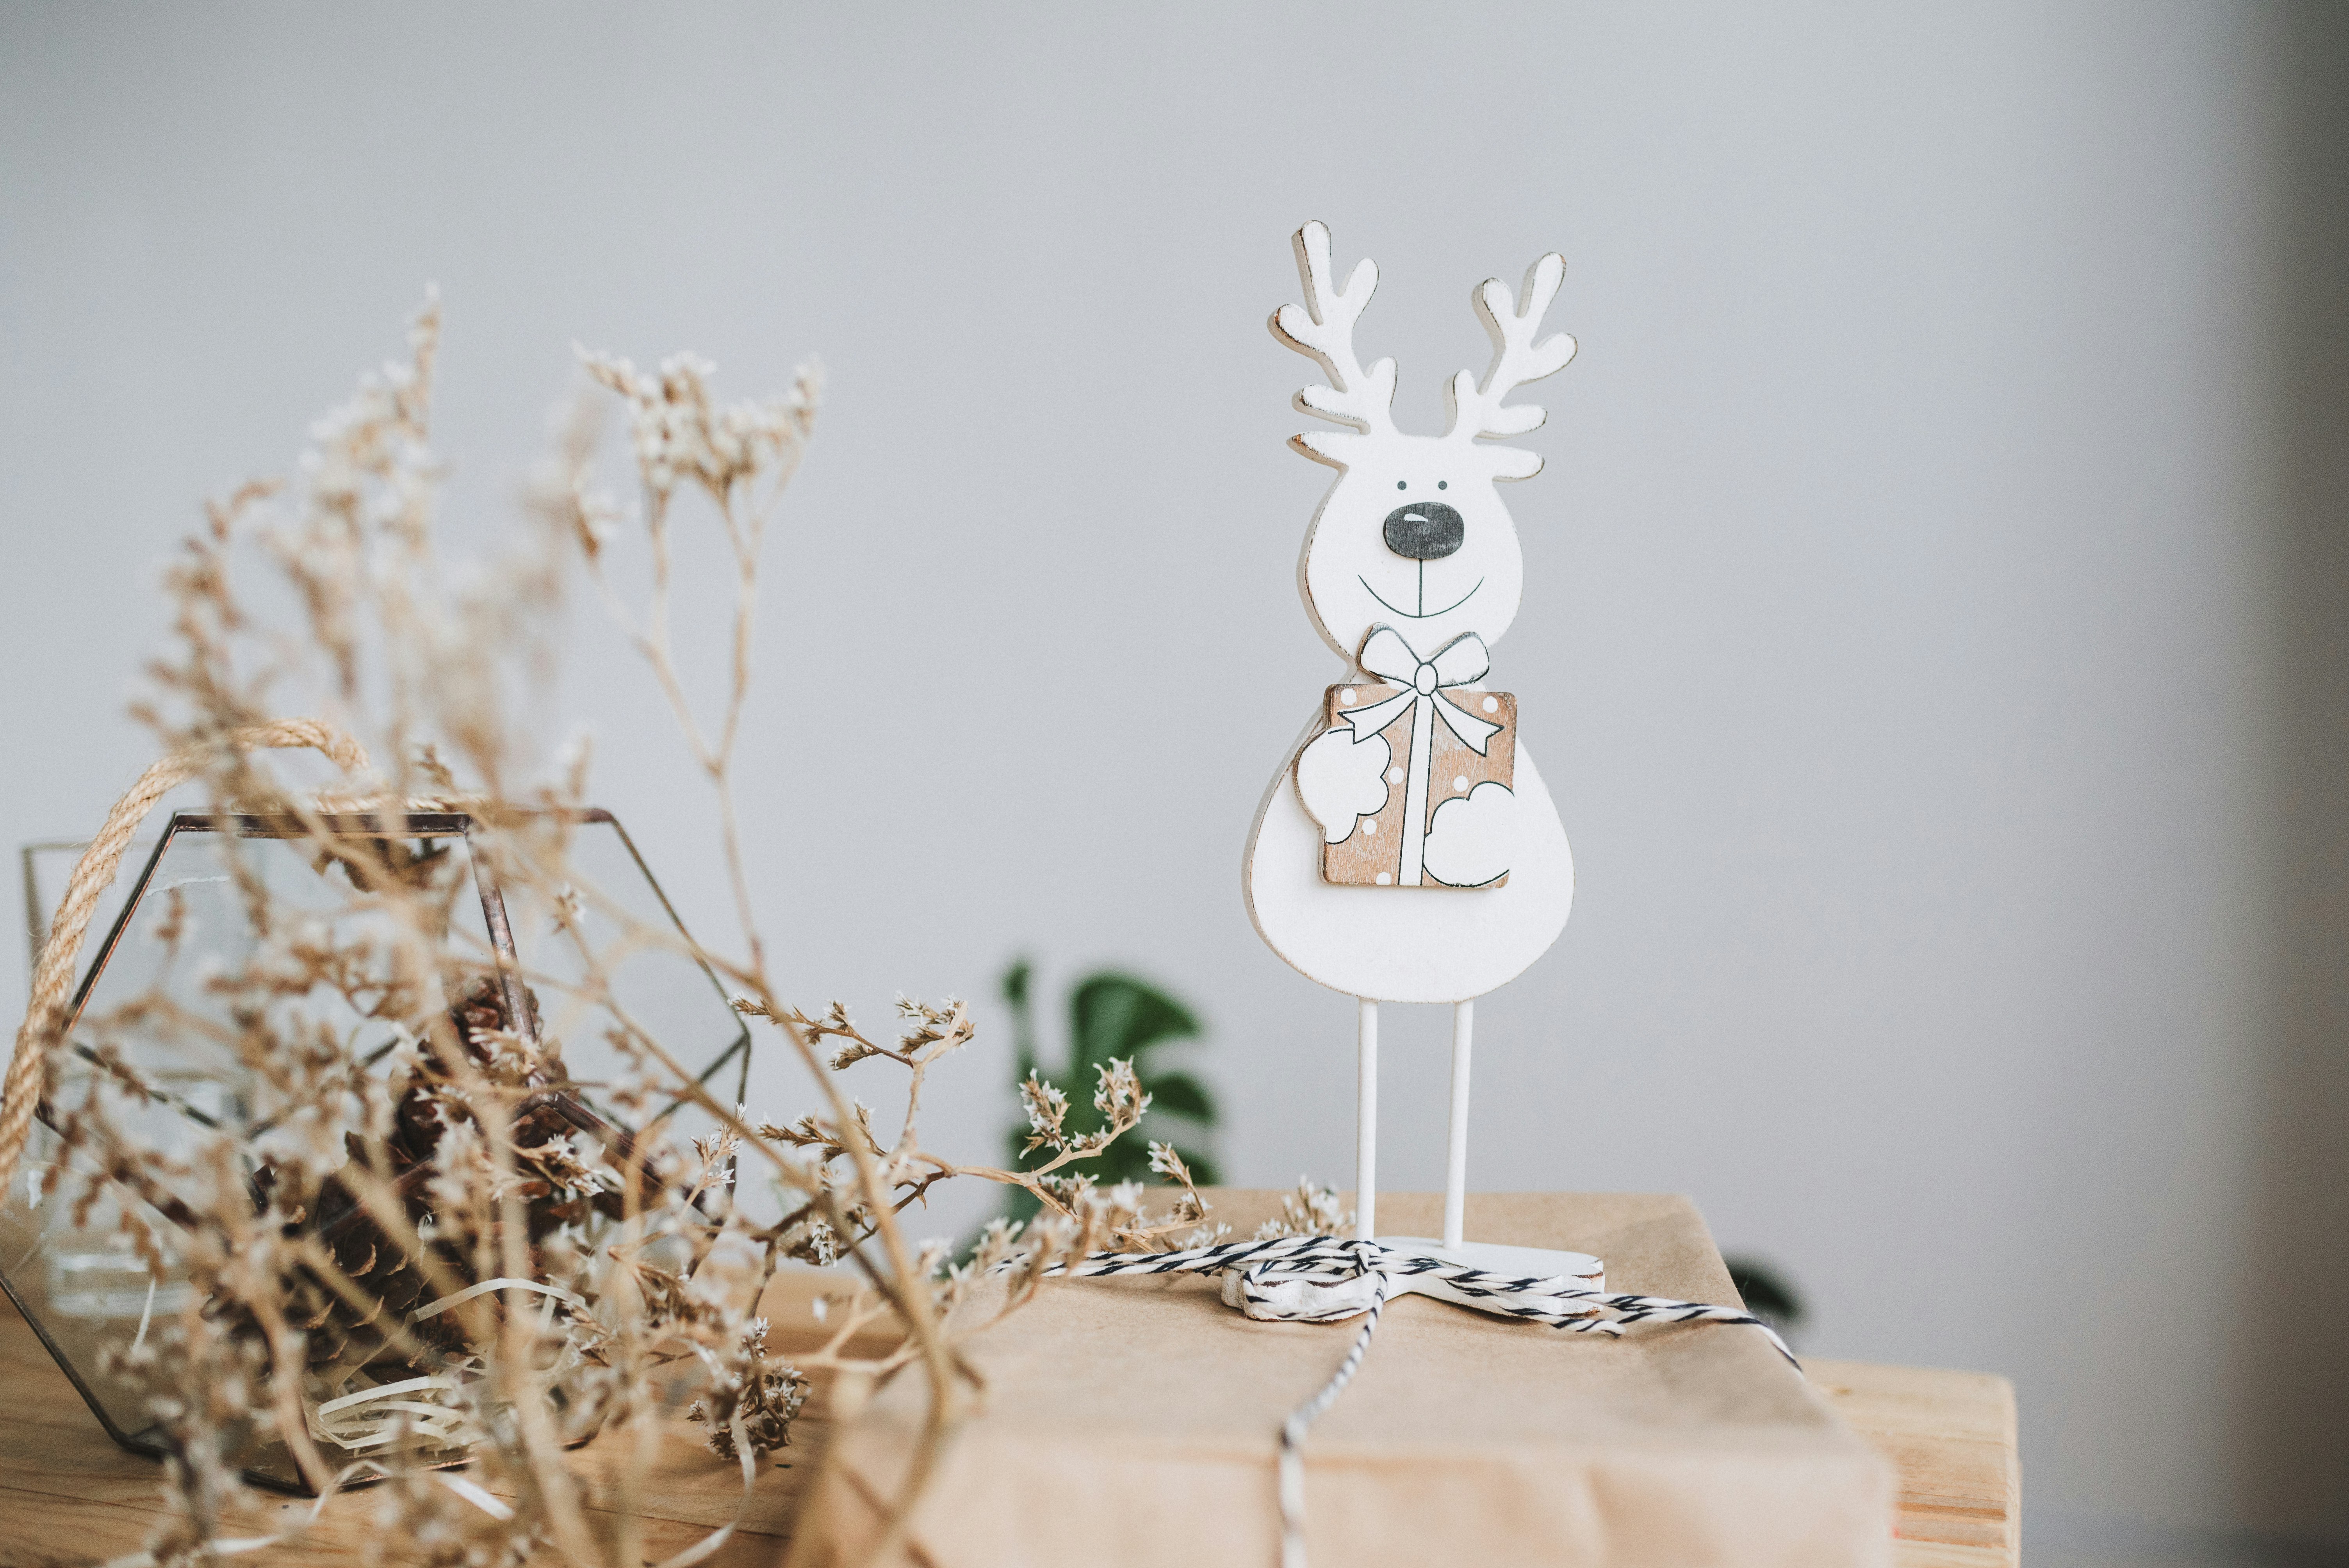 Modern cozy Christmas interior design idea with cute deer